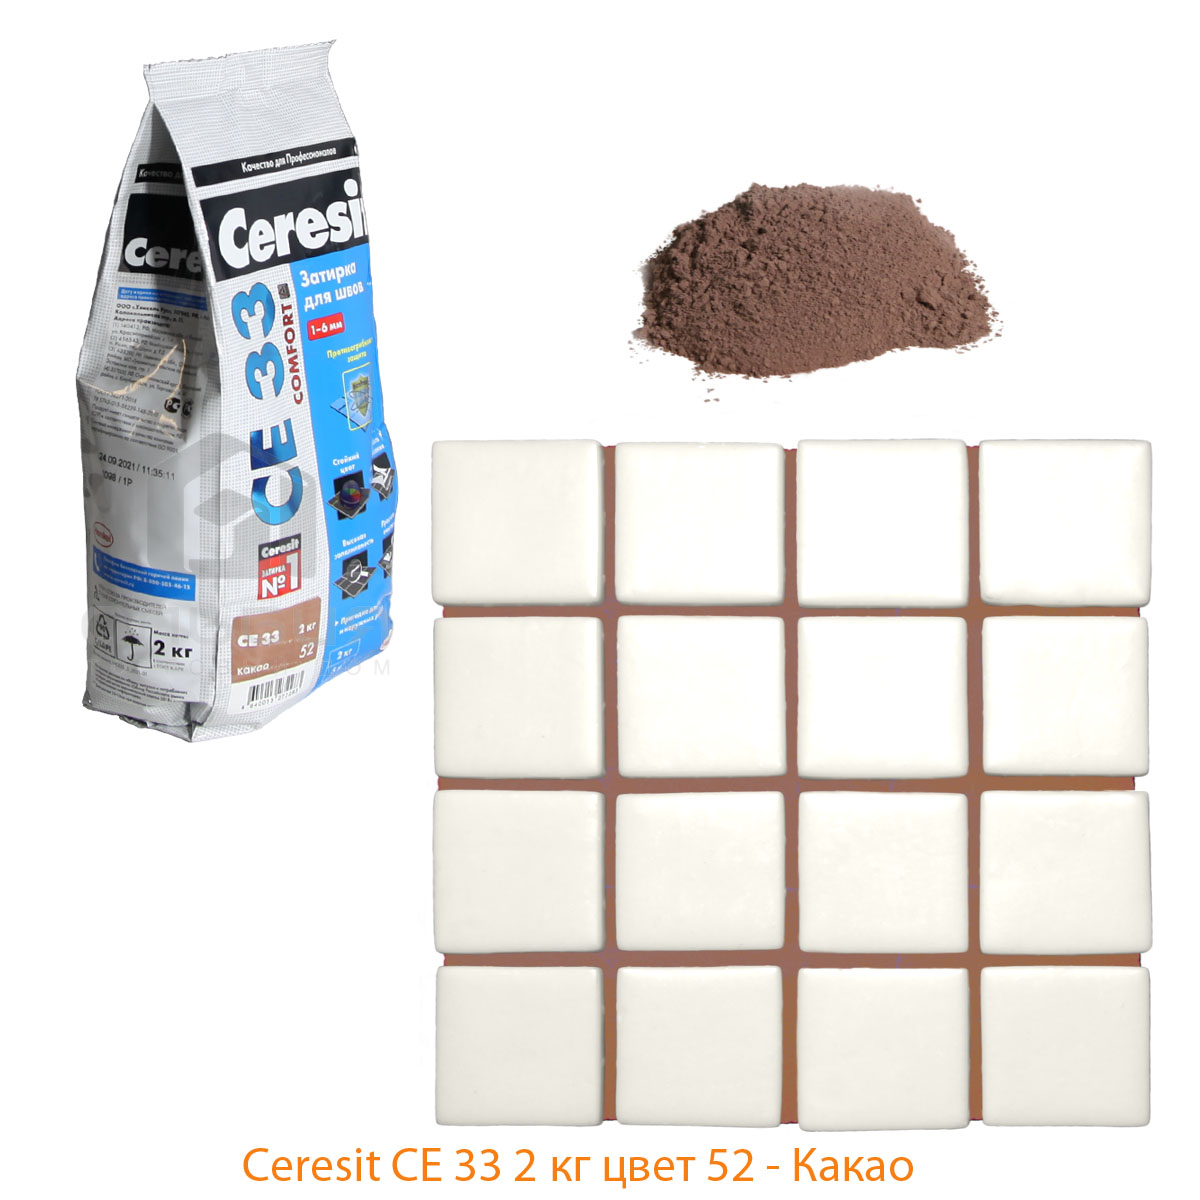 затирка для швов Ceresit CE 33 цвет 52 какао фото цвета